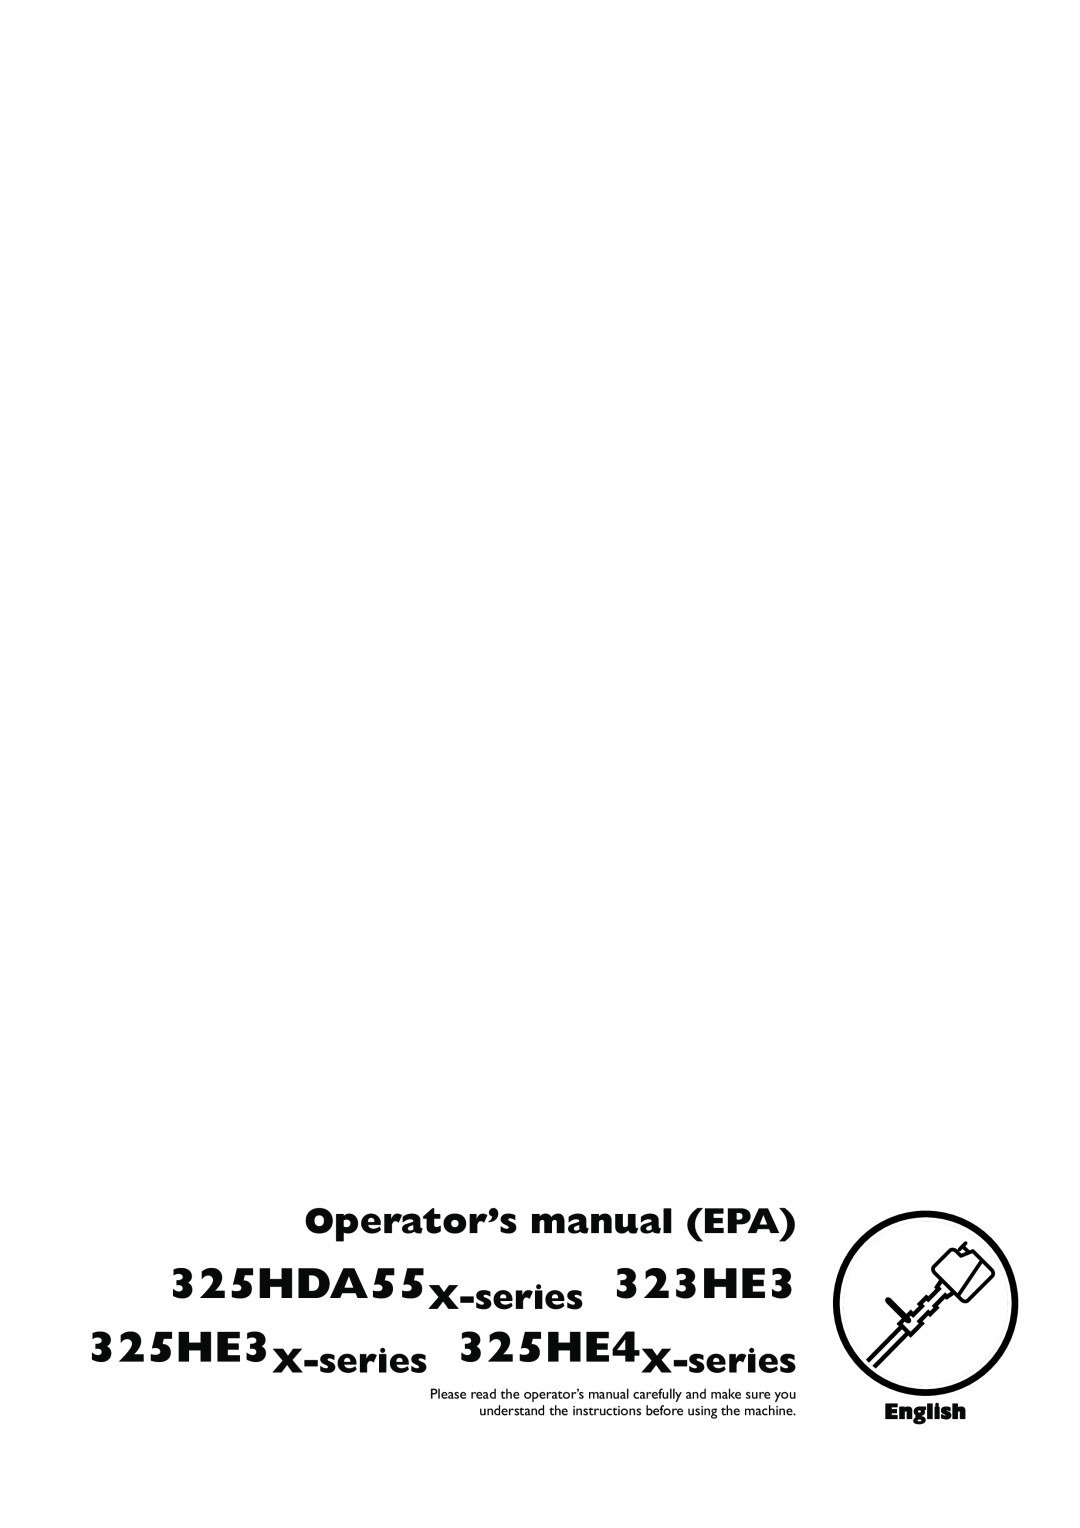 Husqvarna manual 325HDA55X-series 323HE3, Operator’s manual EPA, 325HE3X-series 325HE4X-series, English 